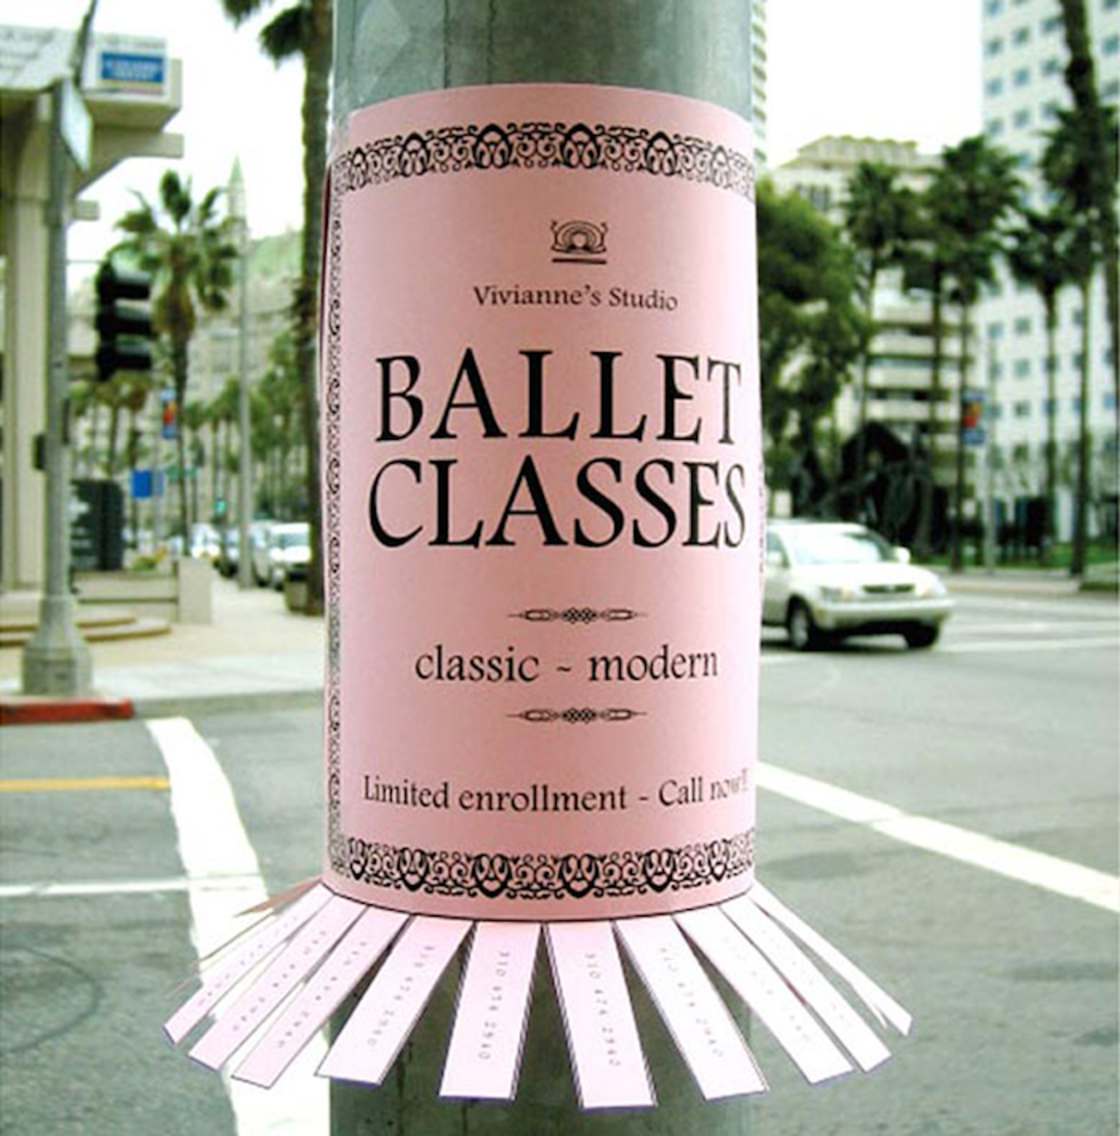 tear off flyer - Vivianne's Studio Ballet Classes classic modern @ i Limited enrollment Call mou.